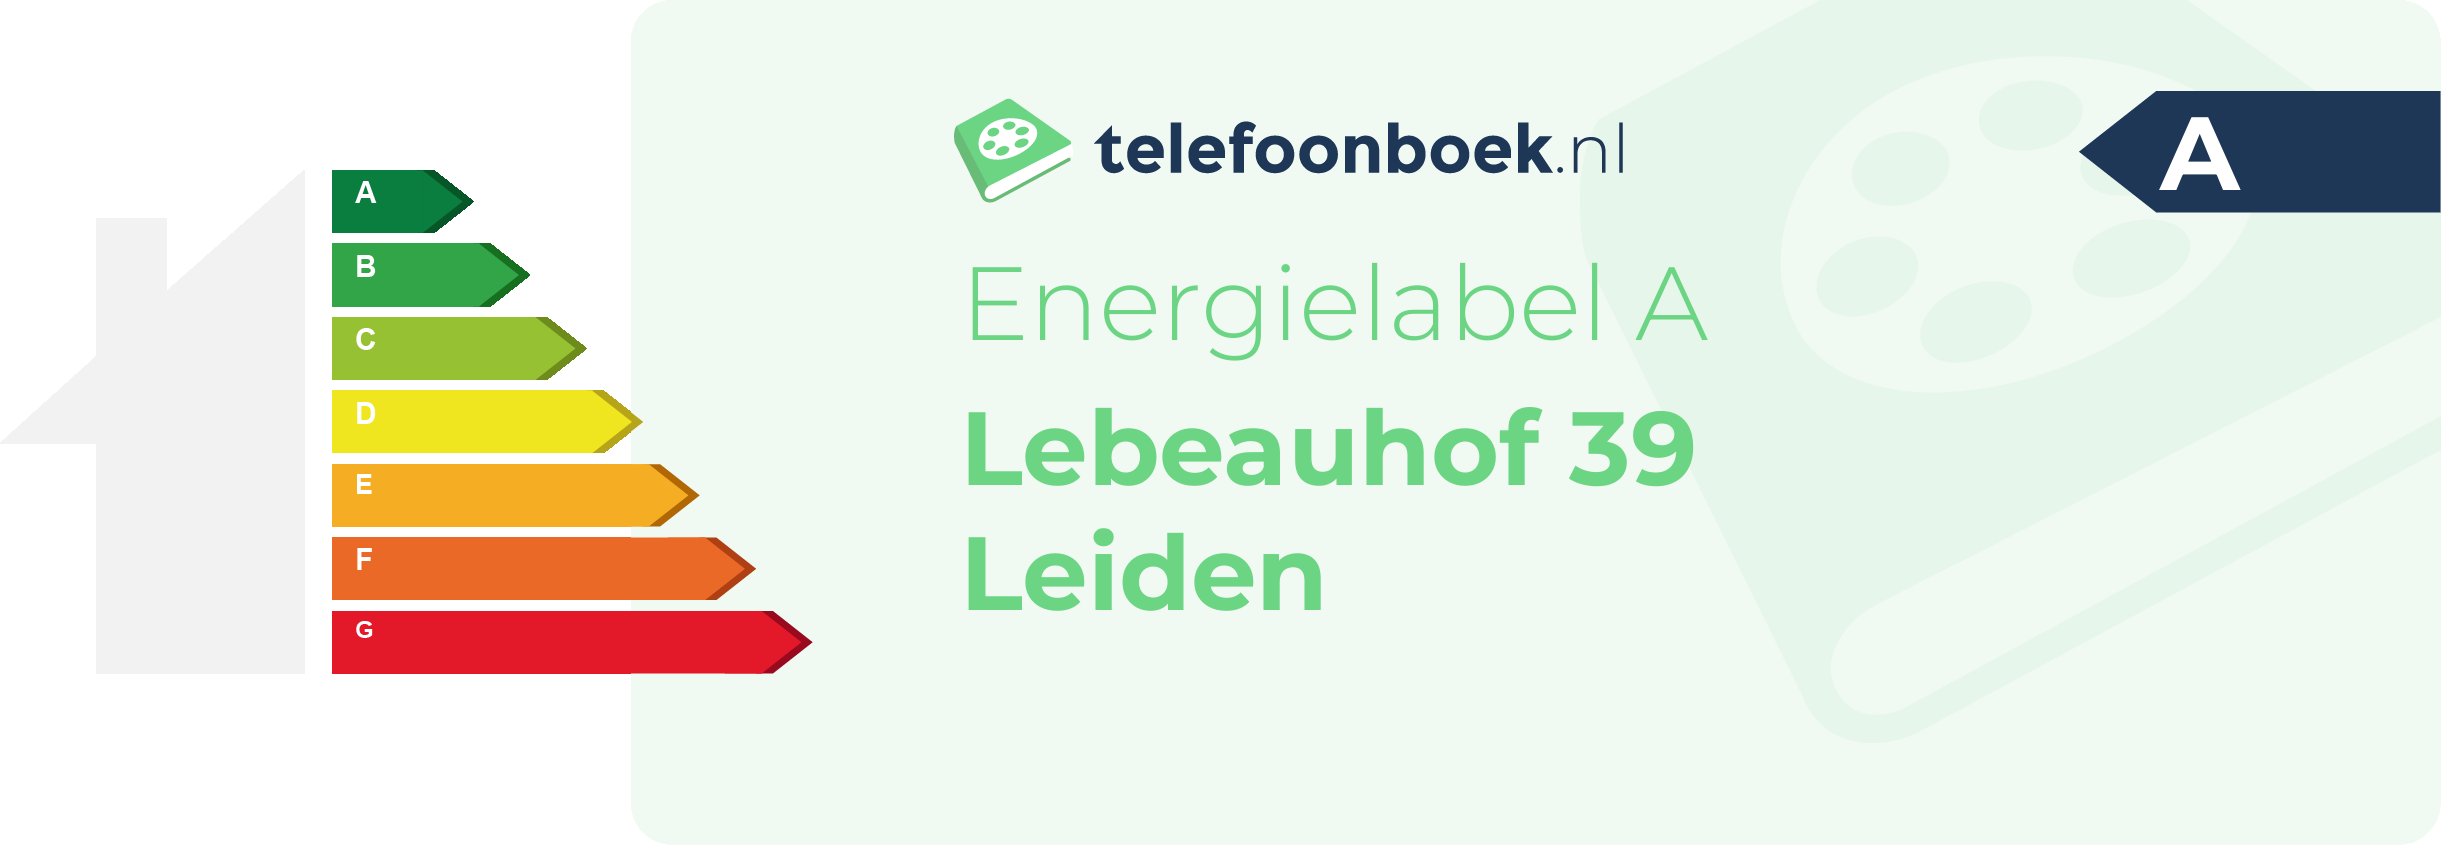 Energielabel Lebeauhof 39 Leiden